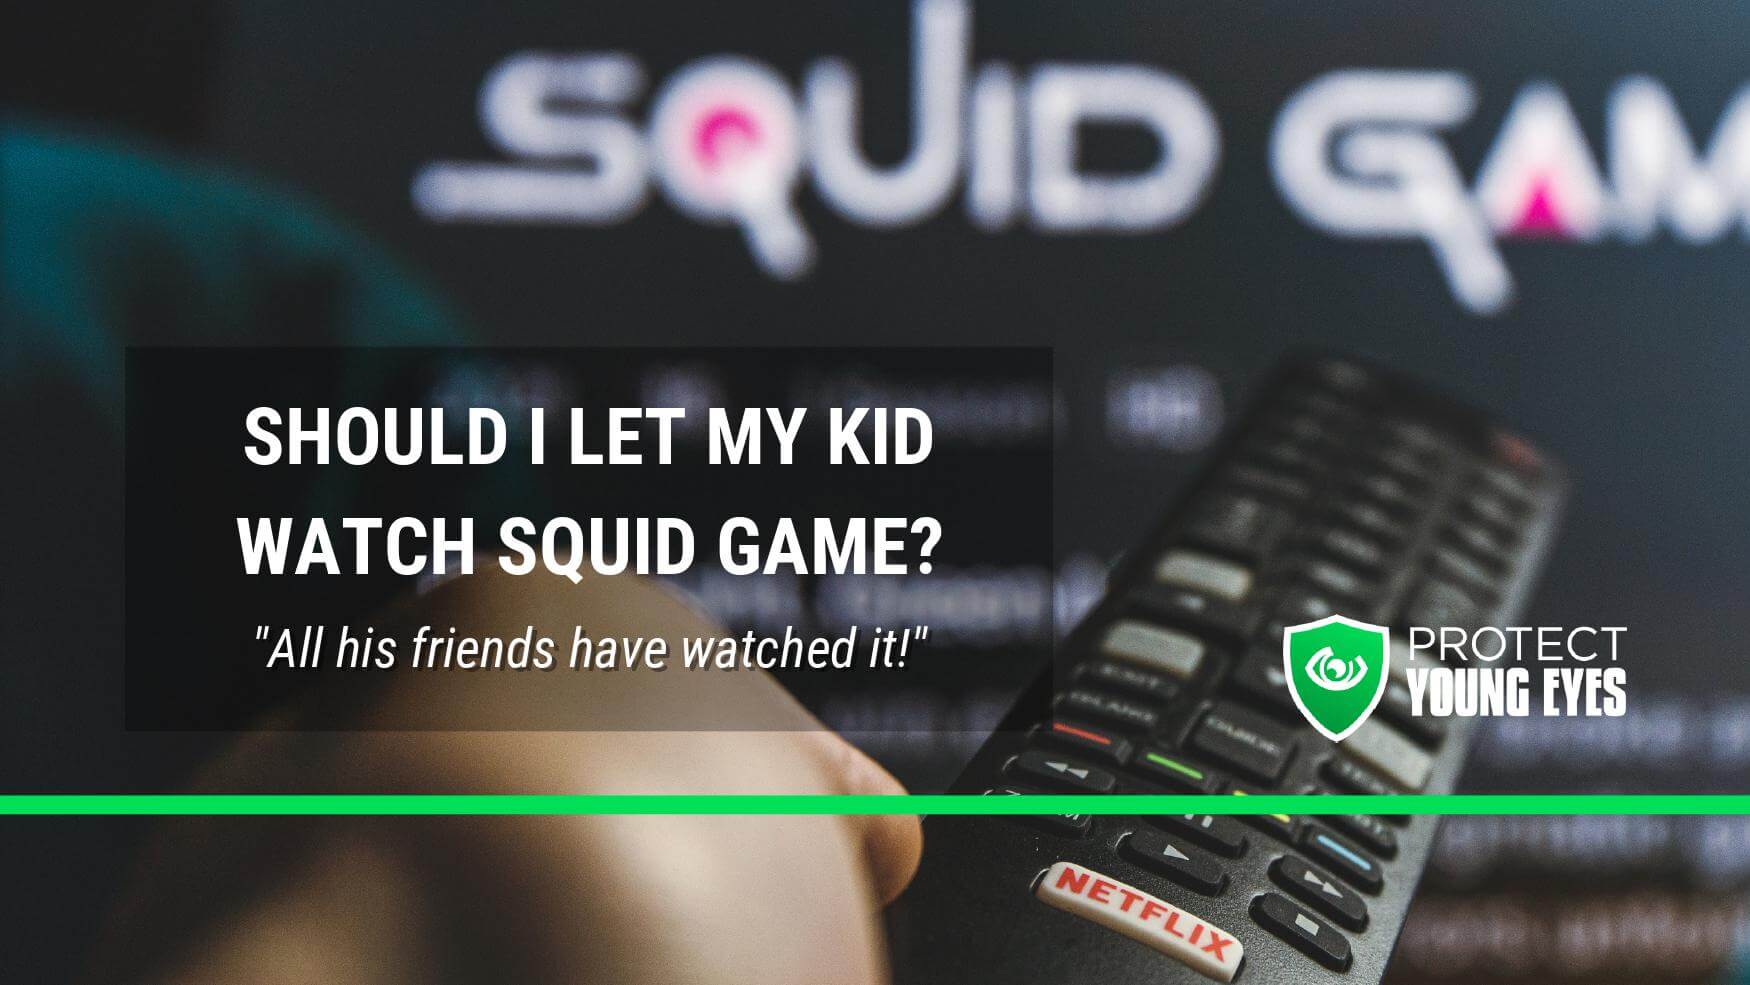 Netflix's 'Squid Game' Has Parents Asking: Should You Let Your Kids Watch?  - WSJ